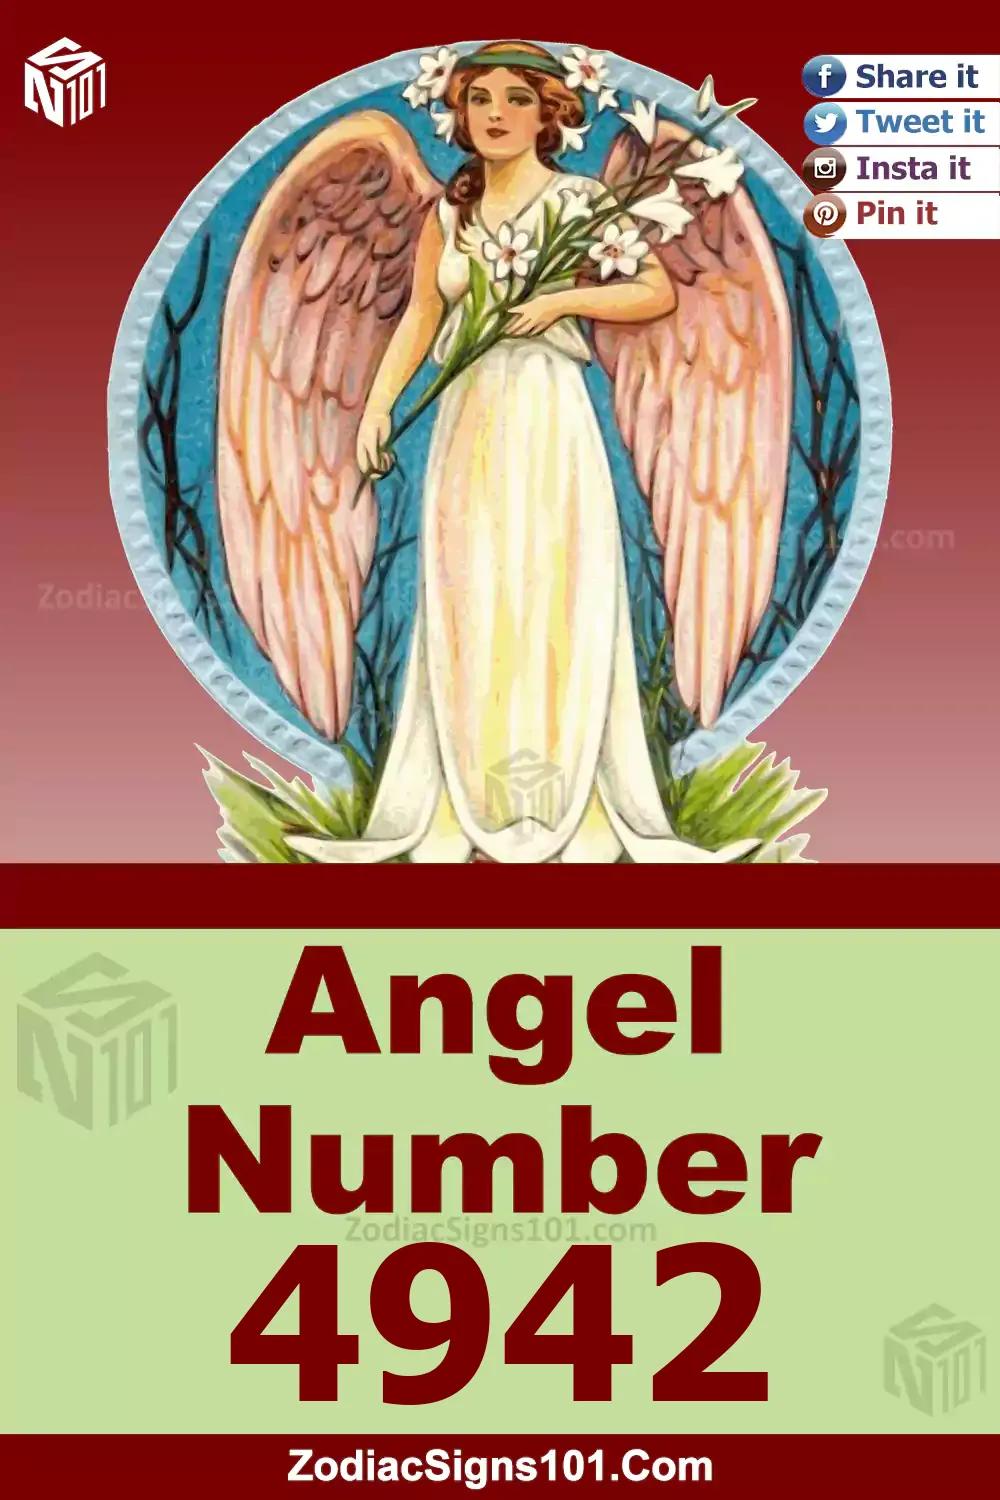 4942-Angel-Number-Meaning.jpg